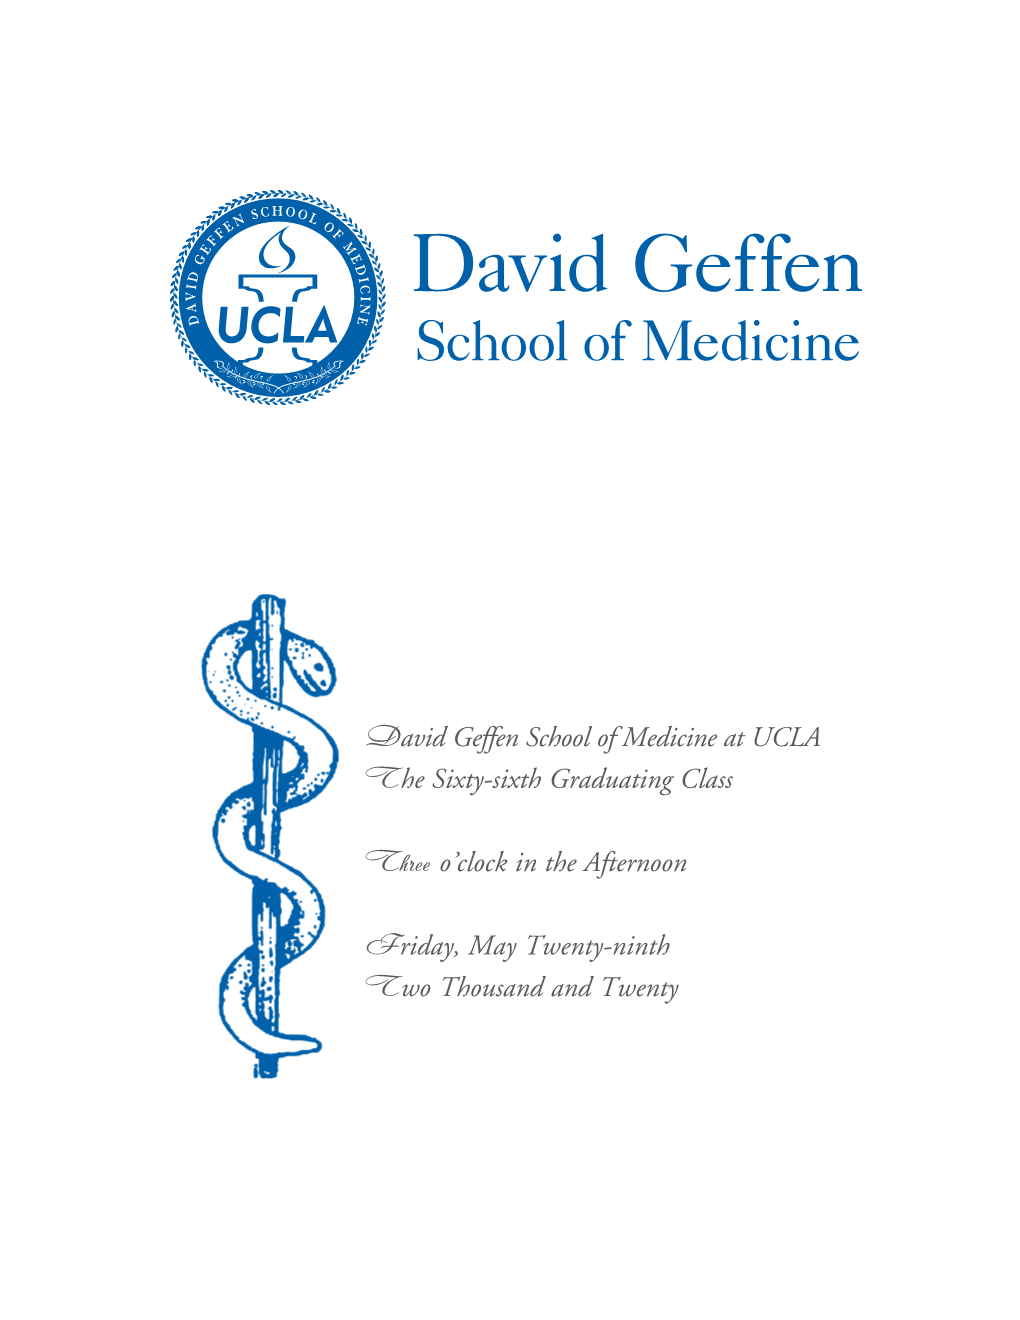 David Geffen School of Medicine at UCLA the Sixty-Sixth Graduating Class Three O'clock in the Afternoon Friday, May Twenty-Nin